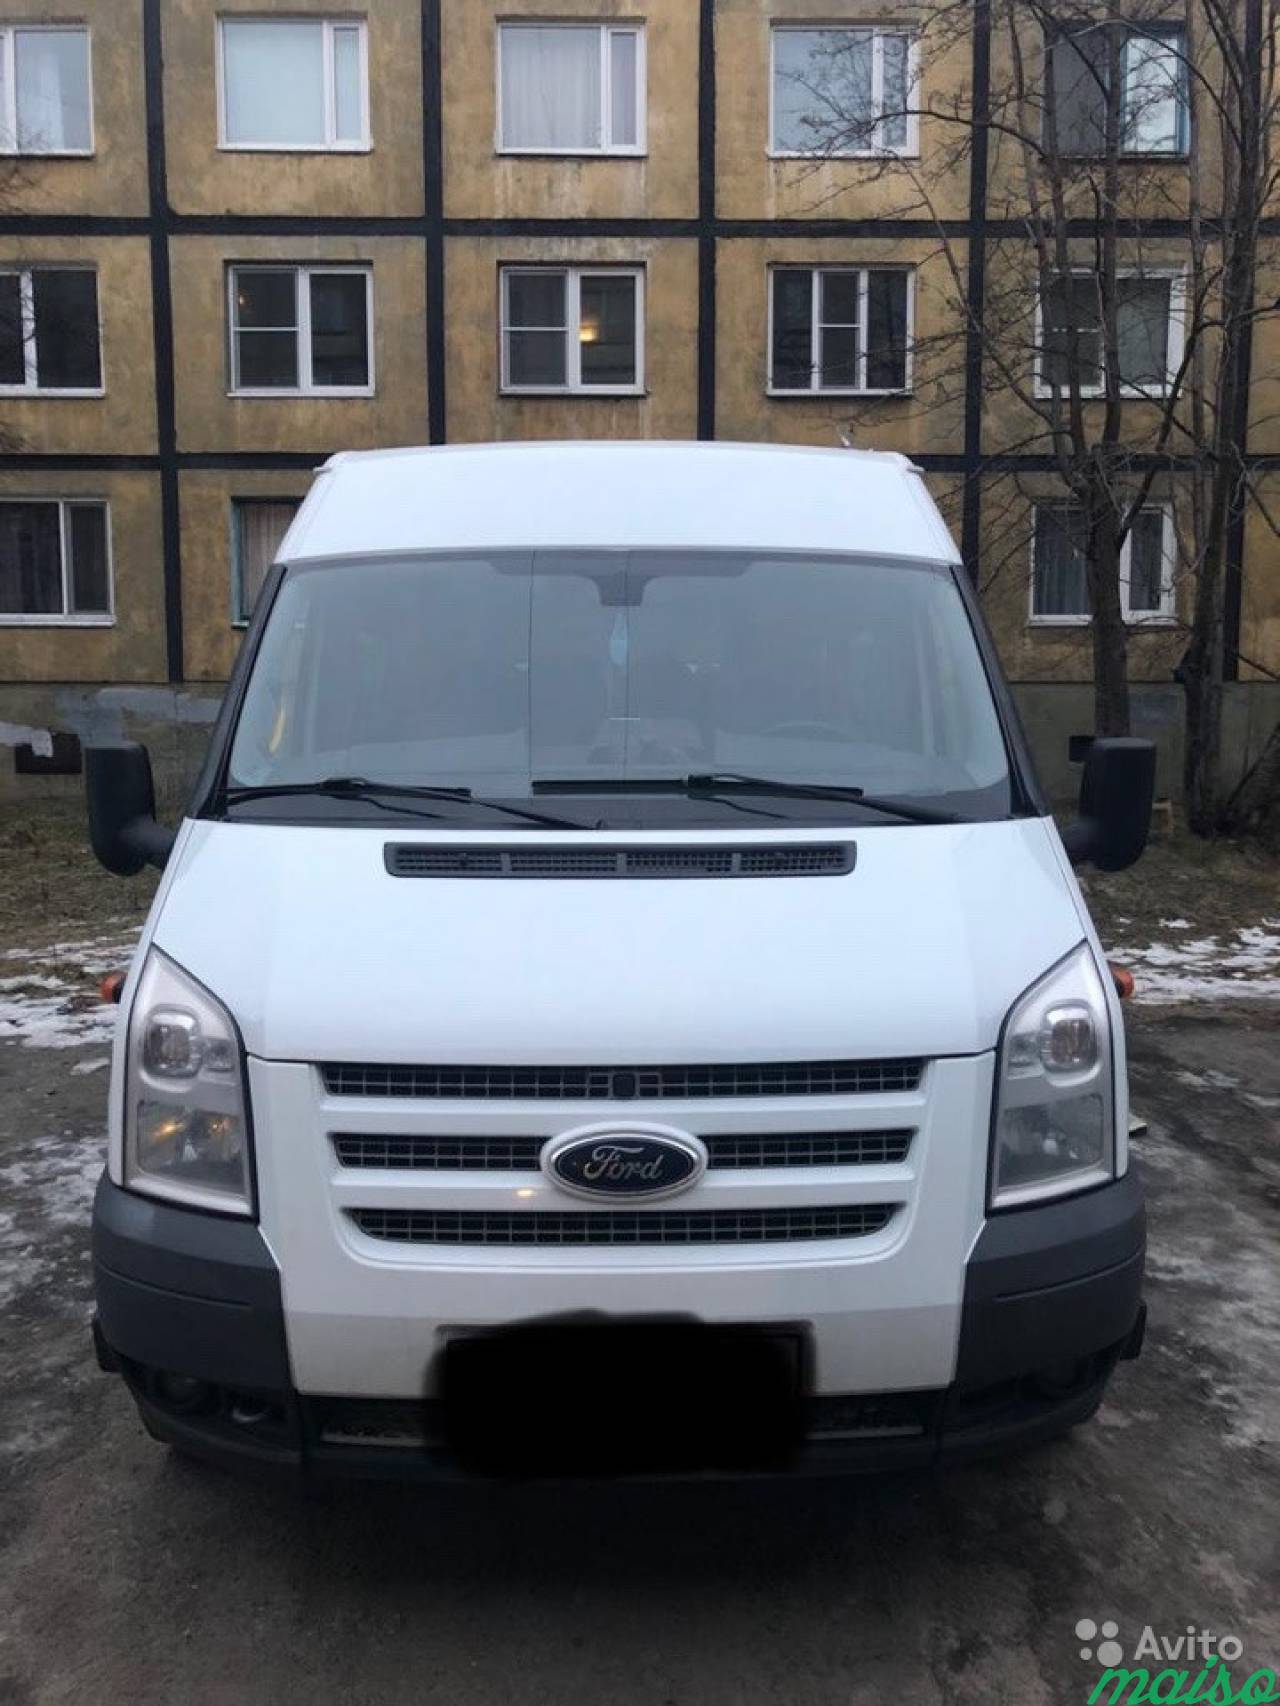 Продам Ford Transit в Санкт-Петербурге. Фото 1